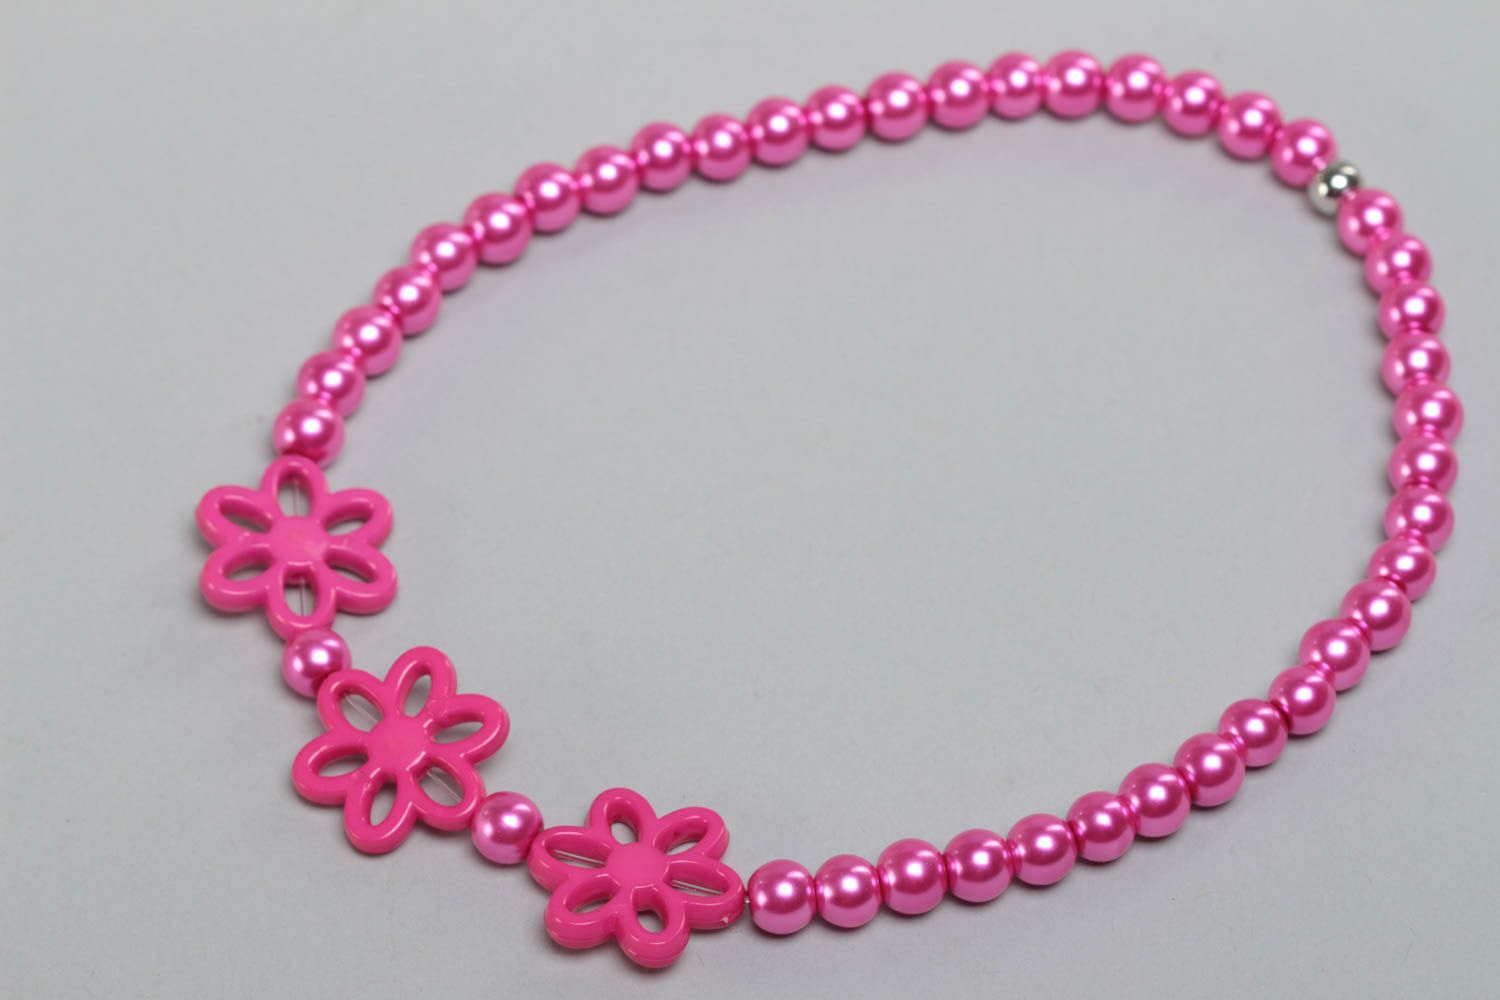 Stylish handmade children's pink bead necklace with flowers designer jewelry photo 2